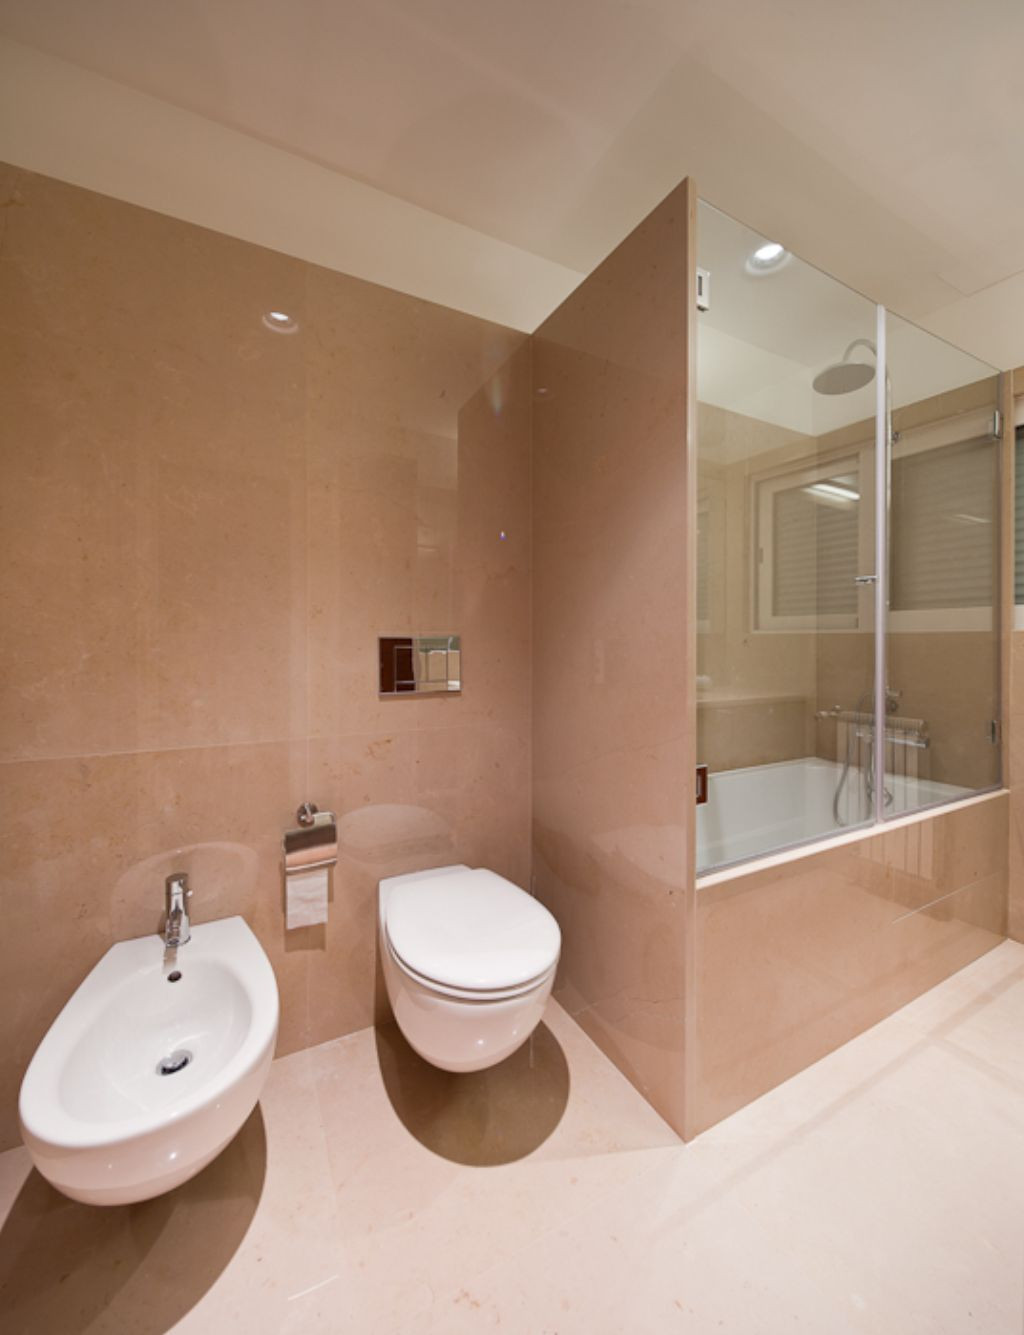 Apartment Bathroom Decor
 26 amazing pictures of traditional bathroom tile design ideas